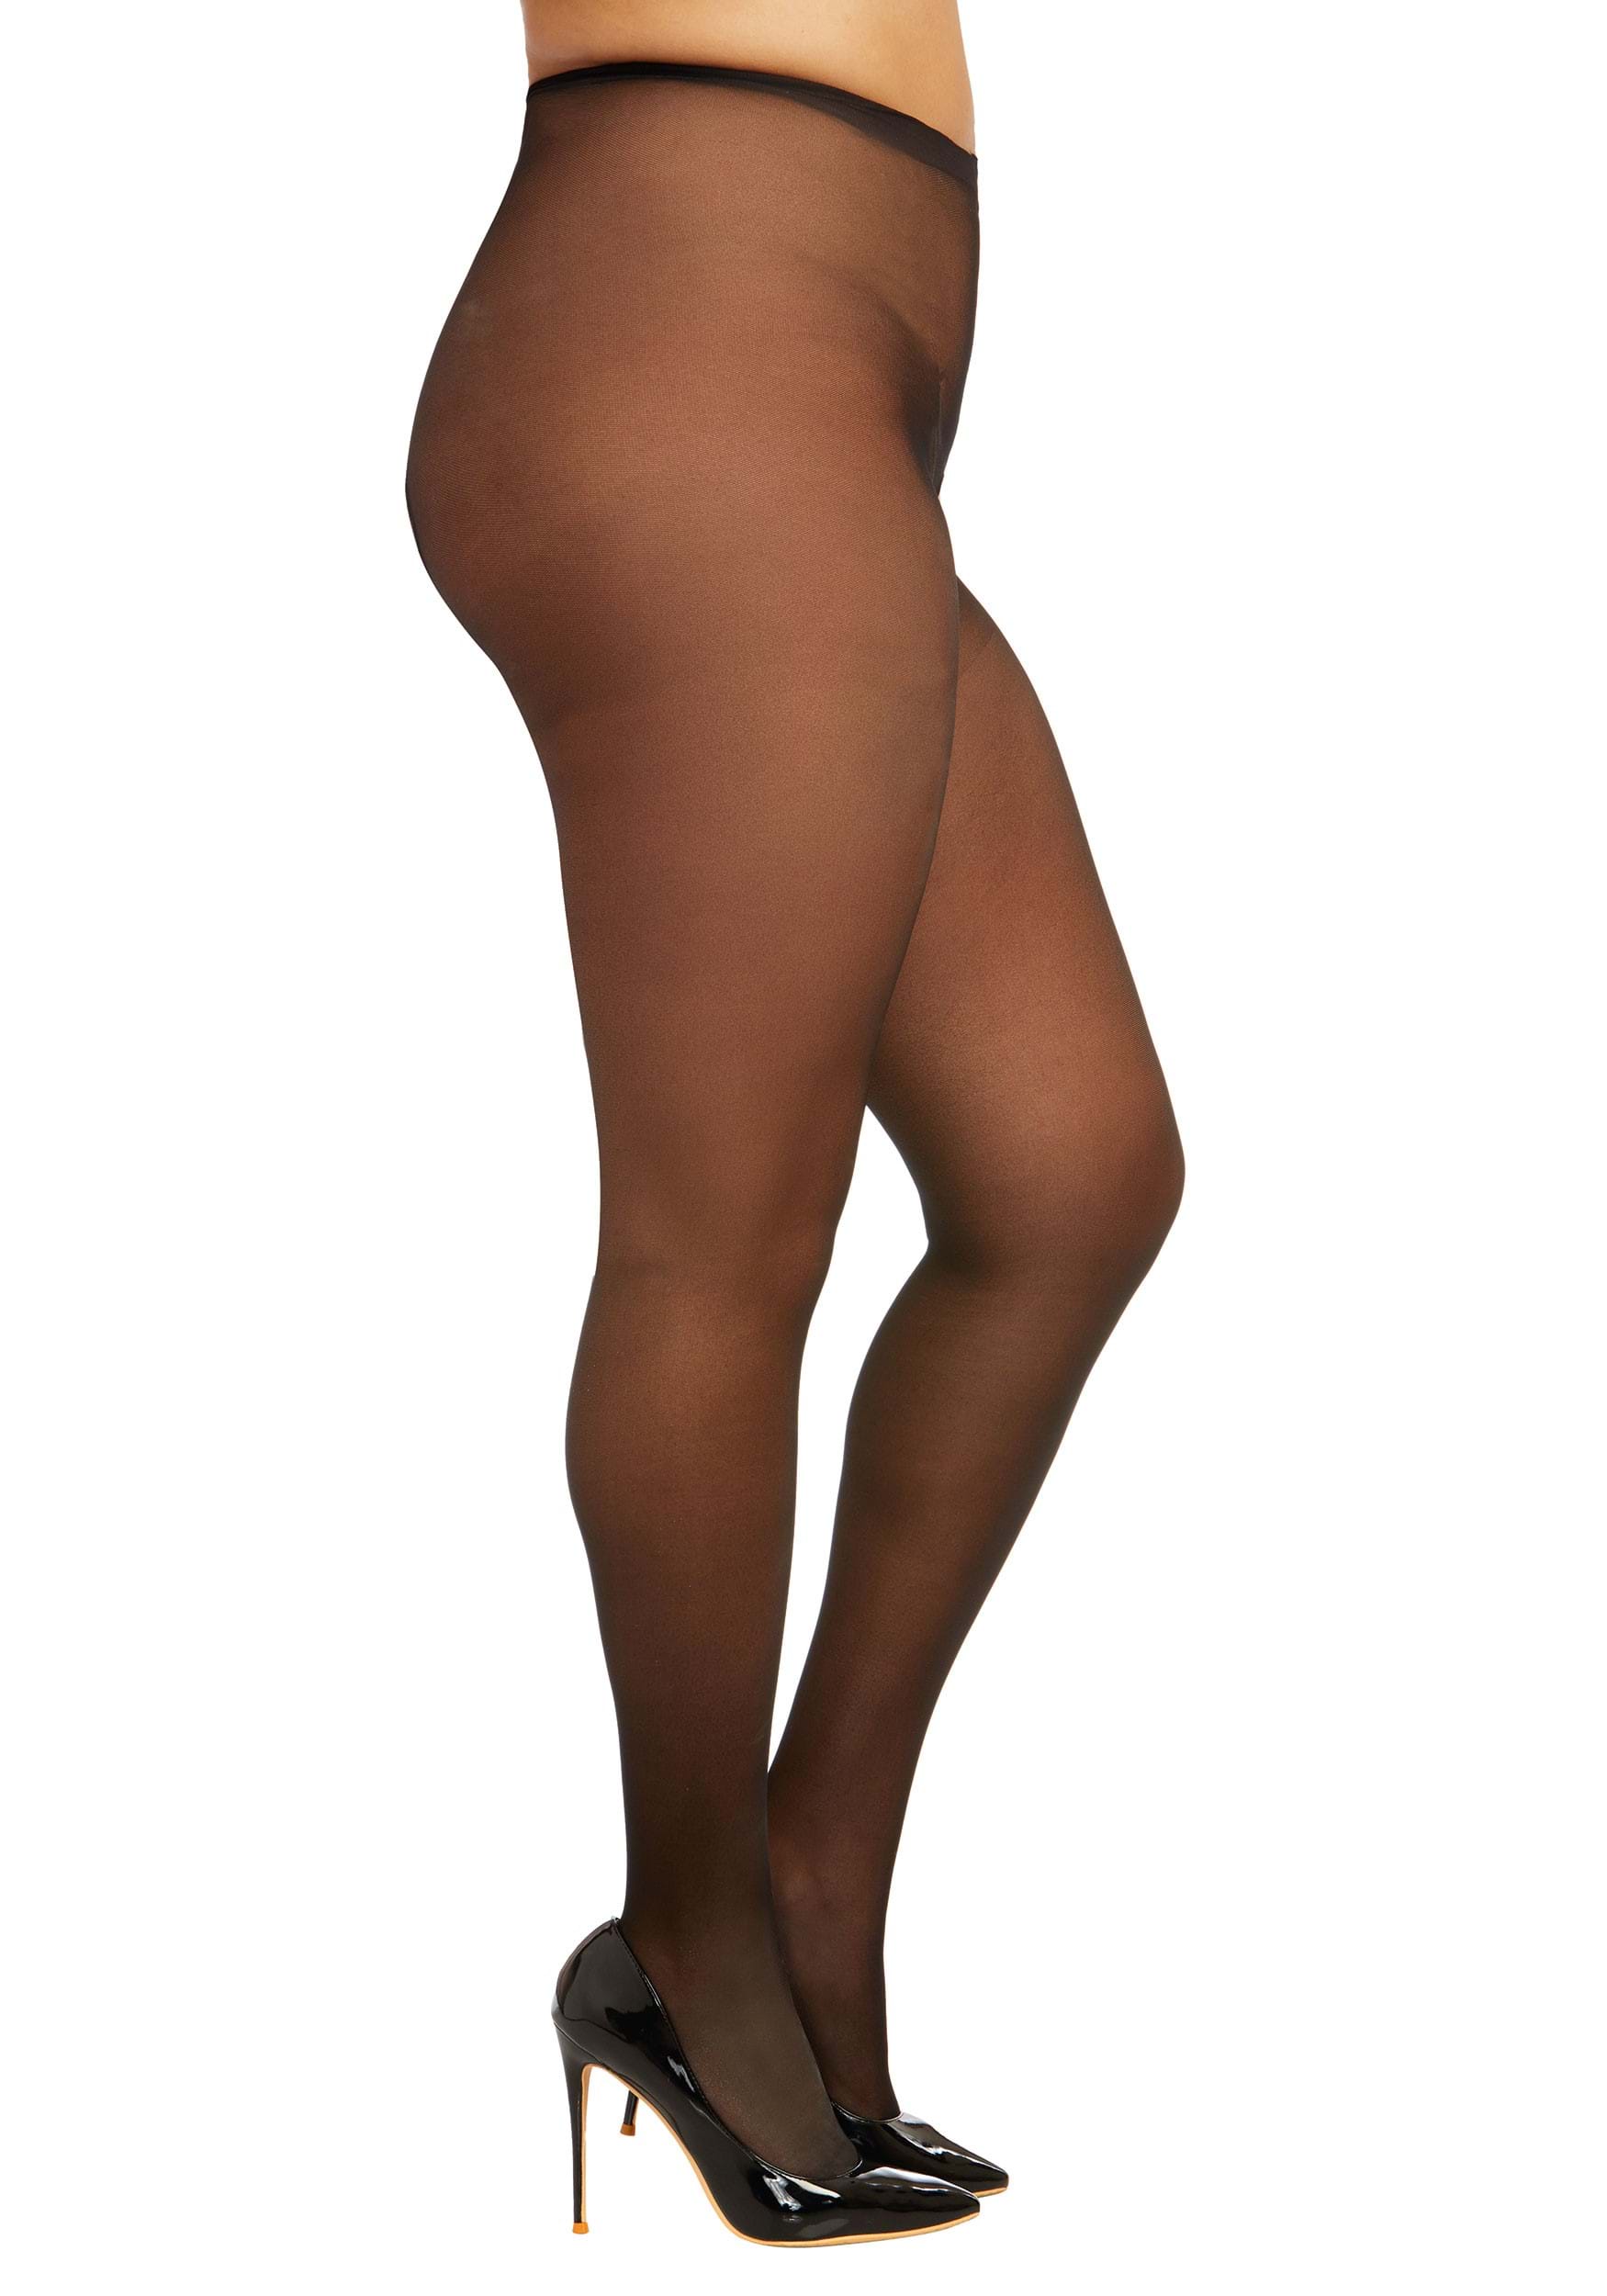 Women's Plus Size T-Crotch Tights, Nylon Pantyhose, High Quality, 60-110kg